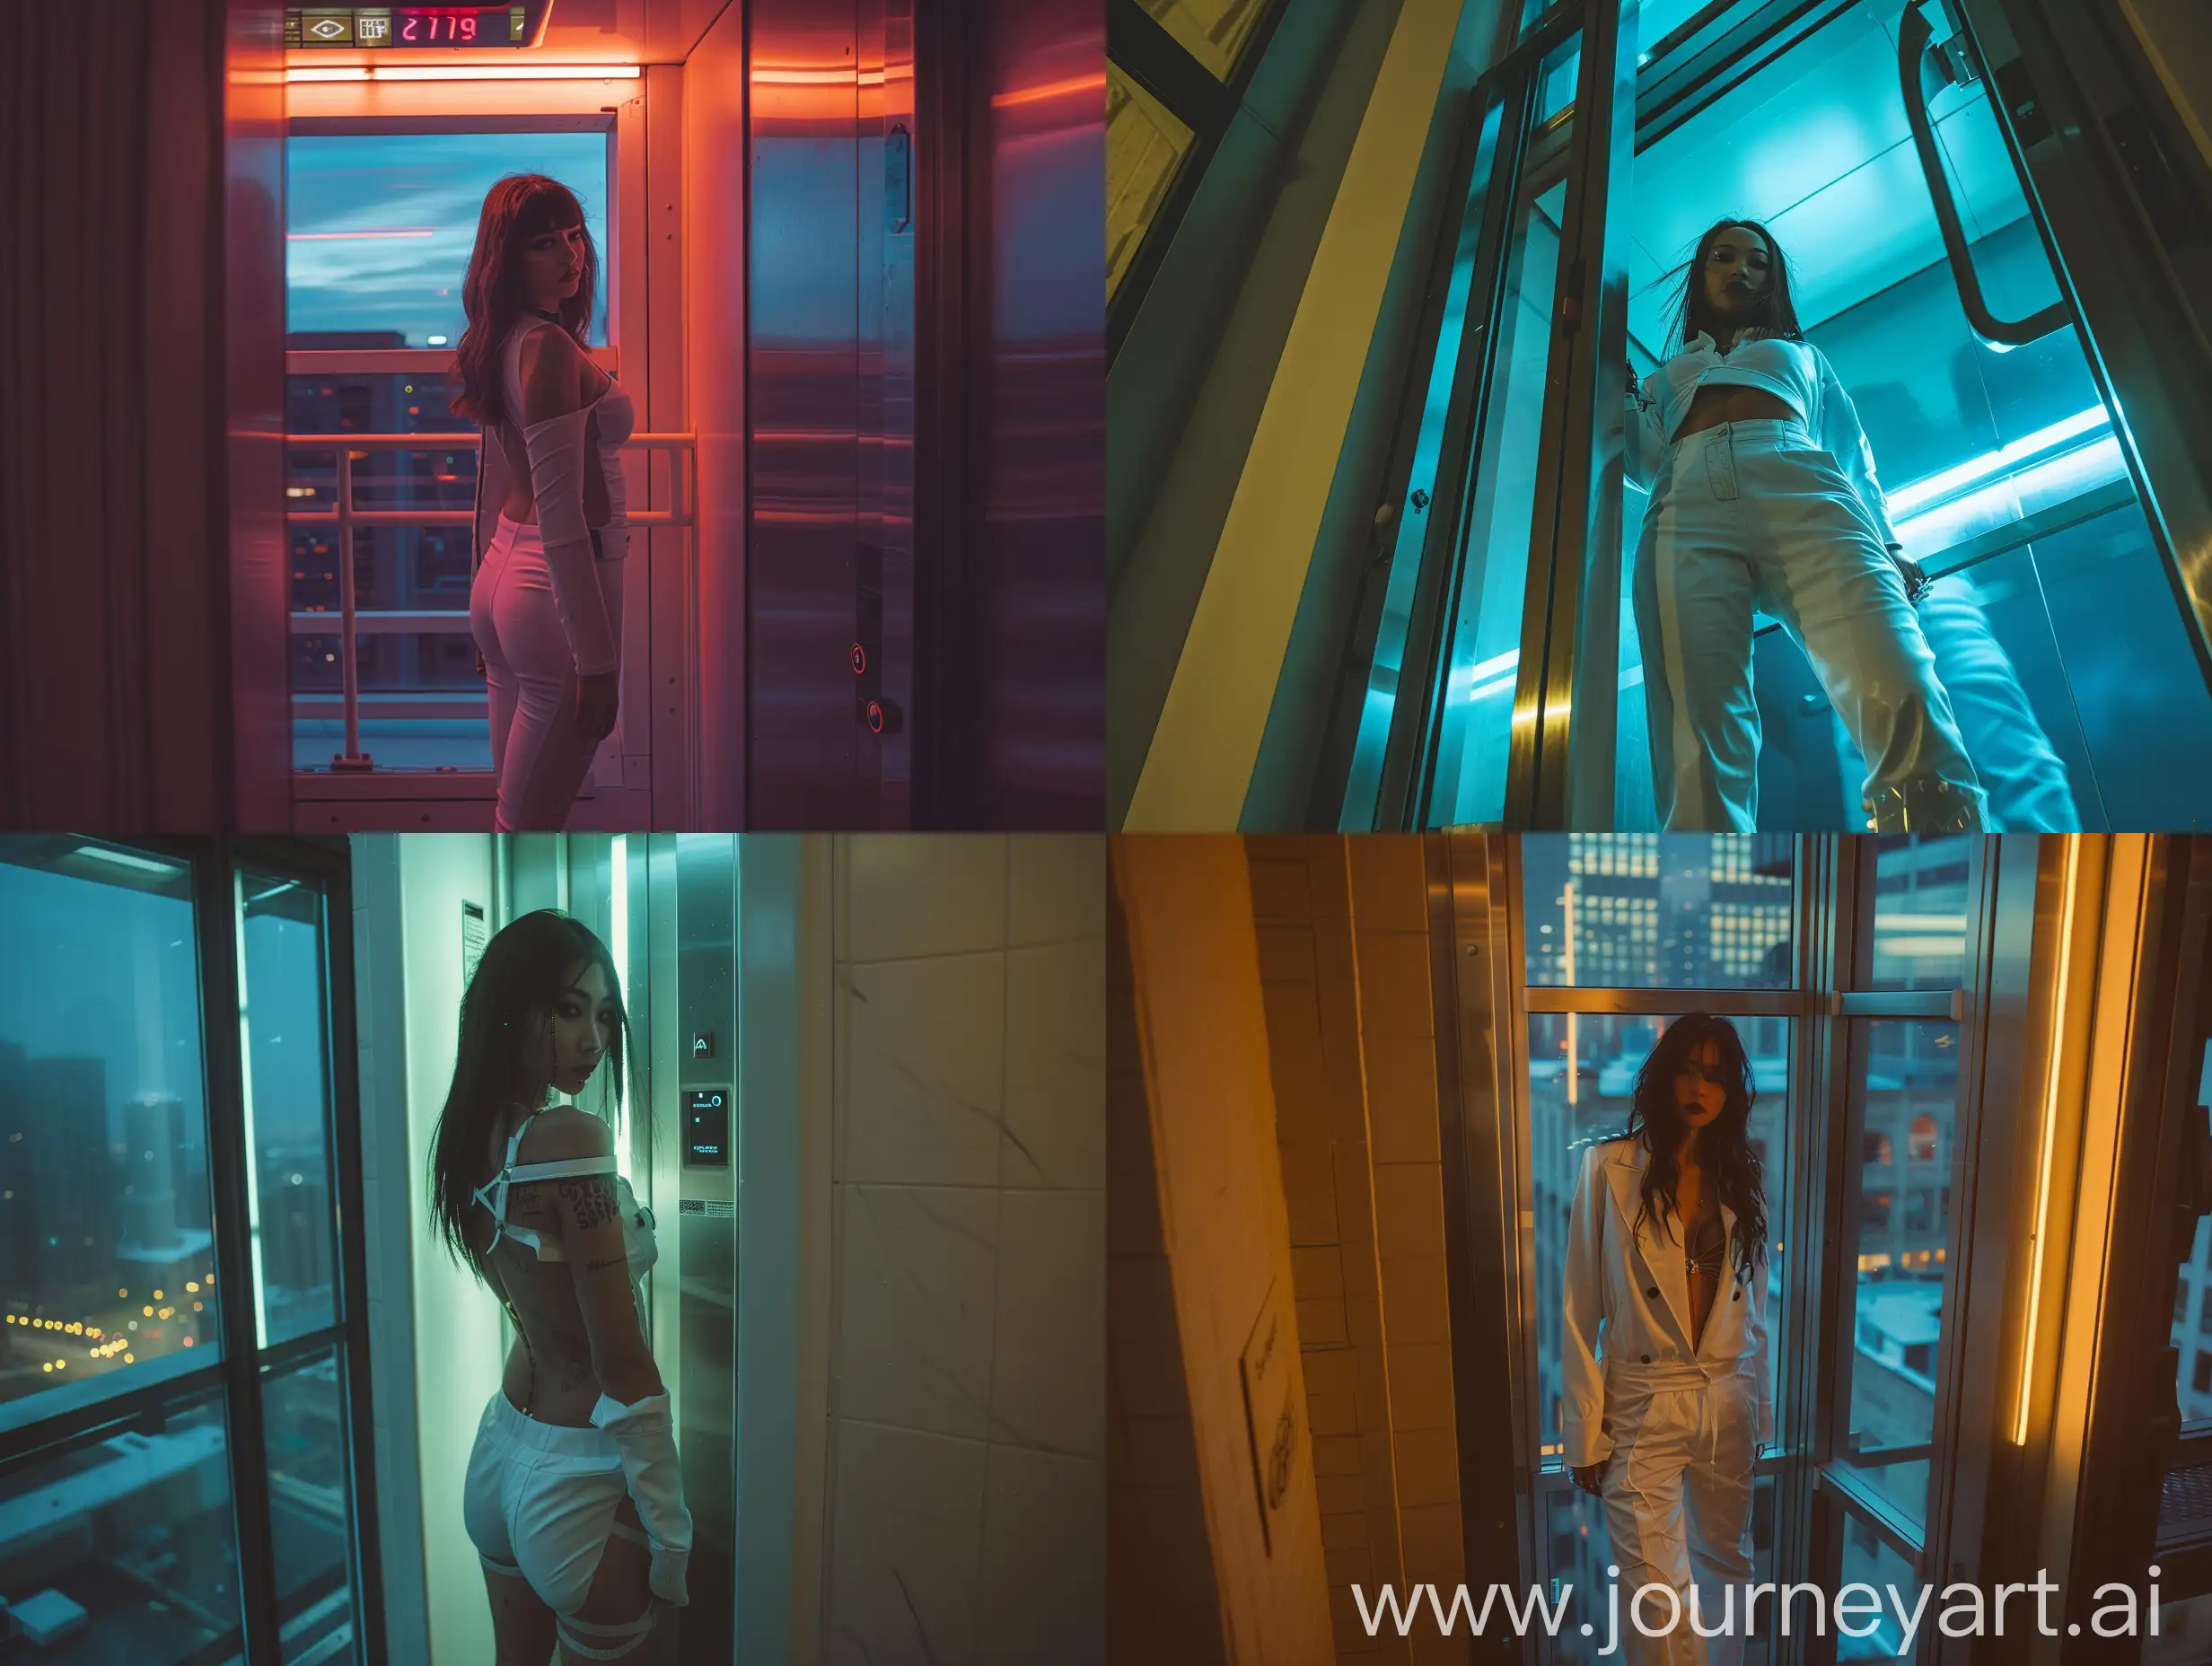 Cyberpunk-Woman-in-White-Standing-by-Elevator-Window-in-Chicago-Nighttime-Scene